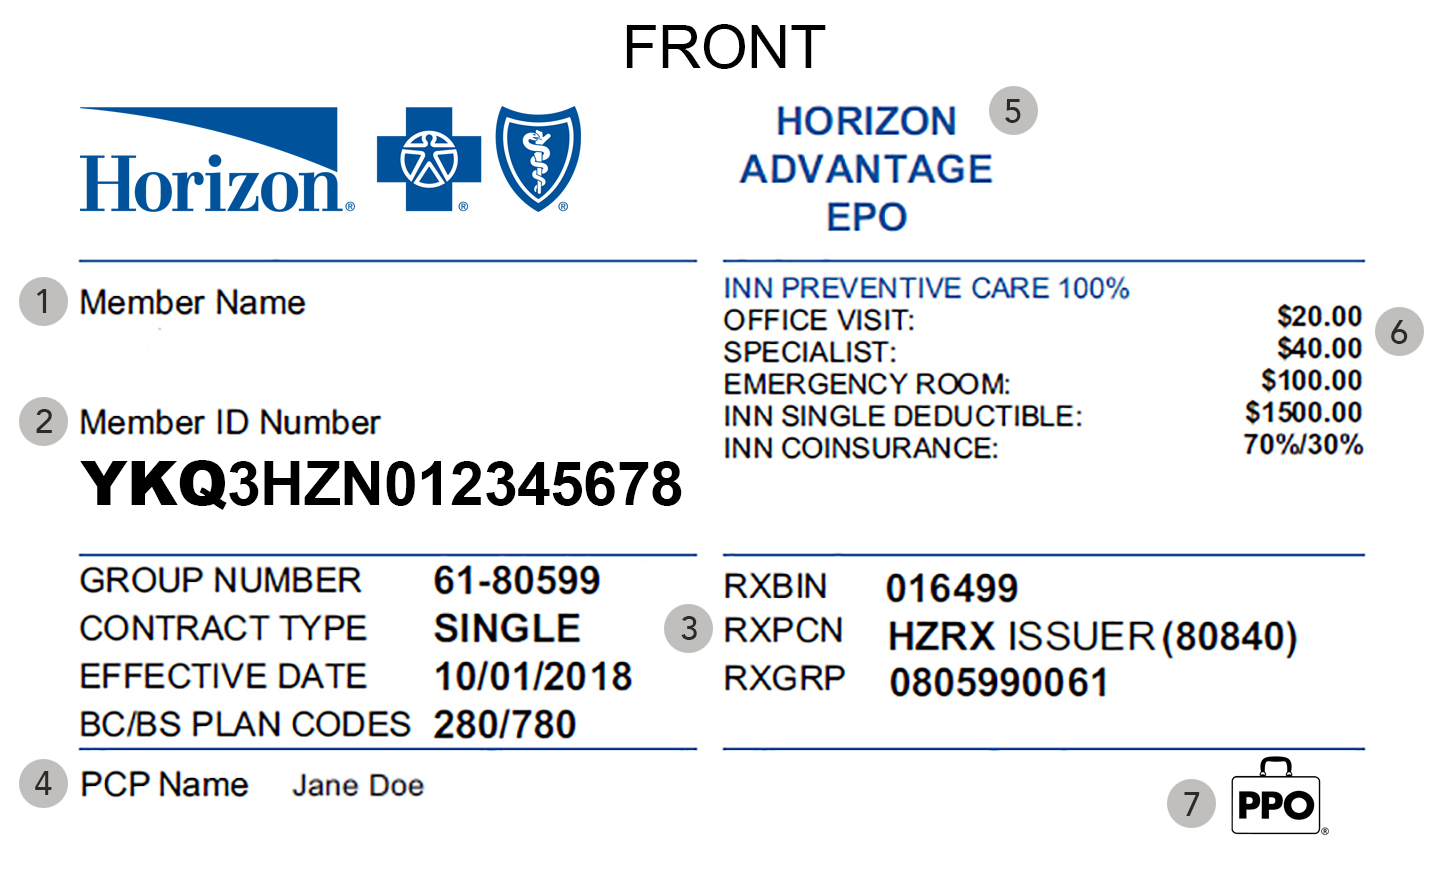 horizon blue cross blue shield provider phone number